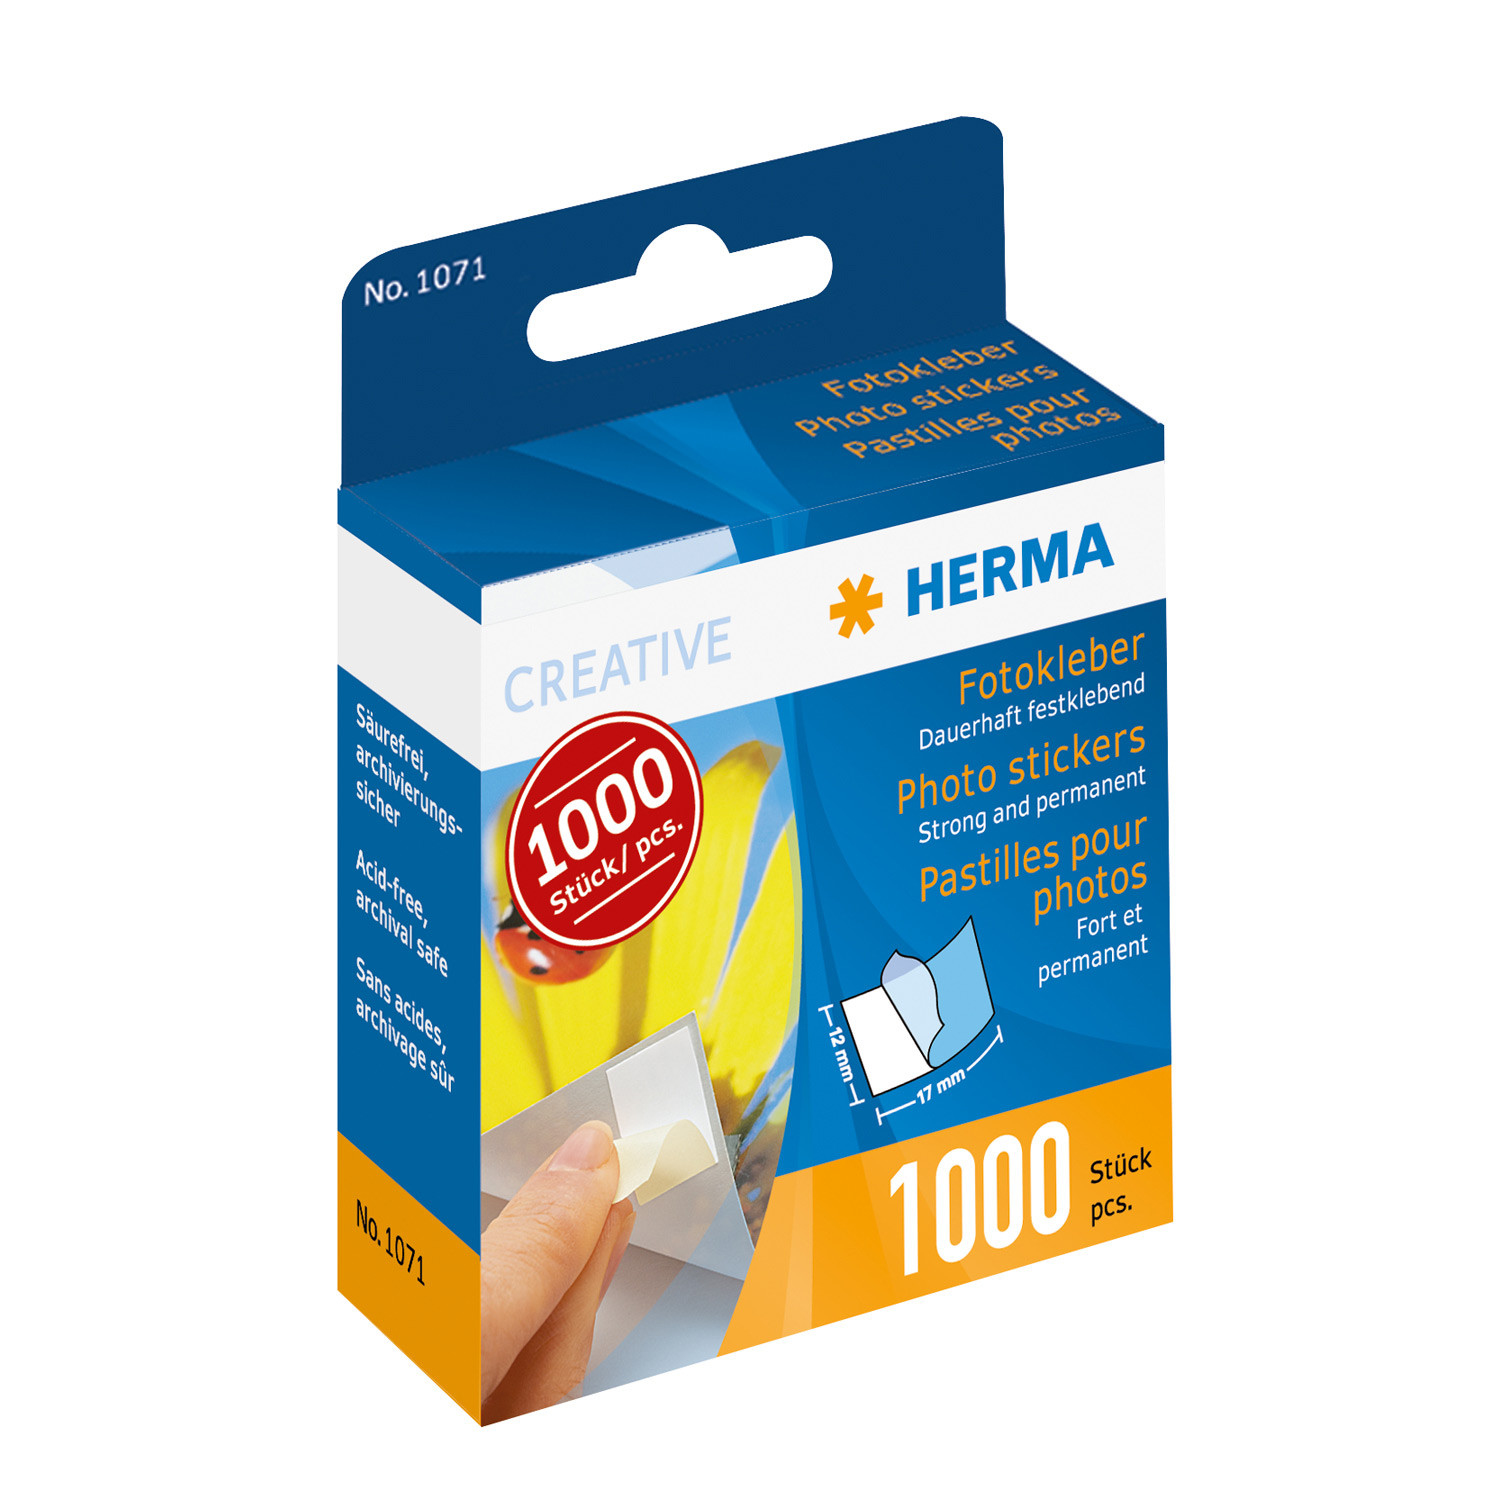 HERMA 1071 - Fotokleber - Kartonspender - weiß - 1000 Stück